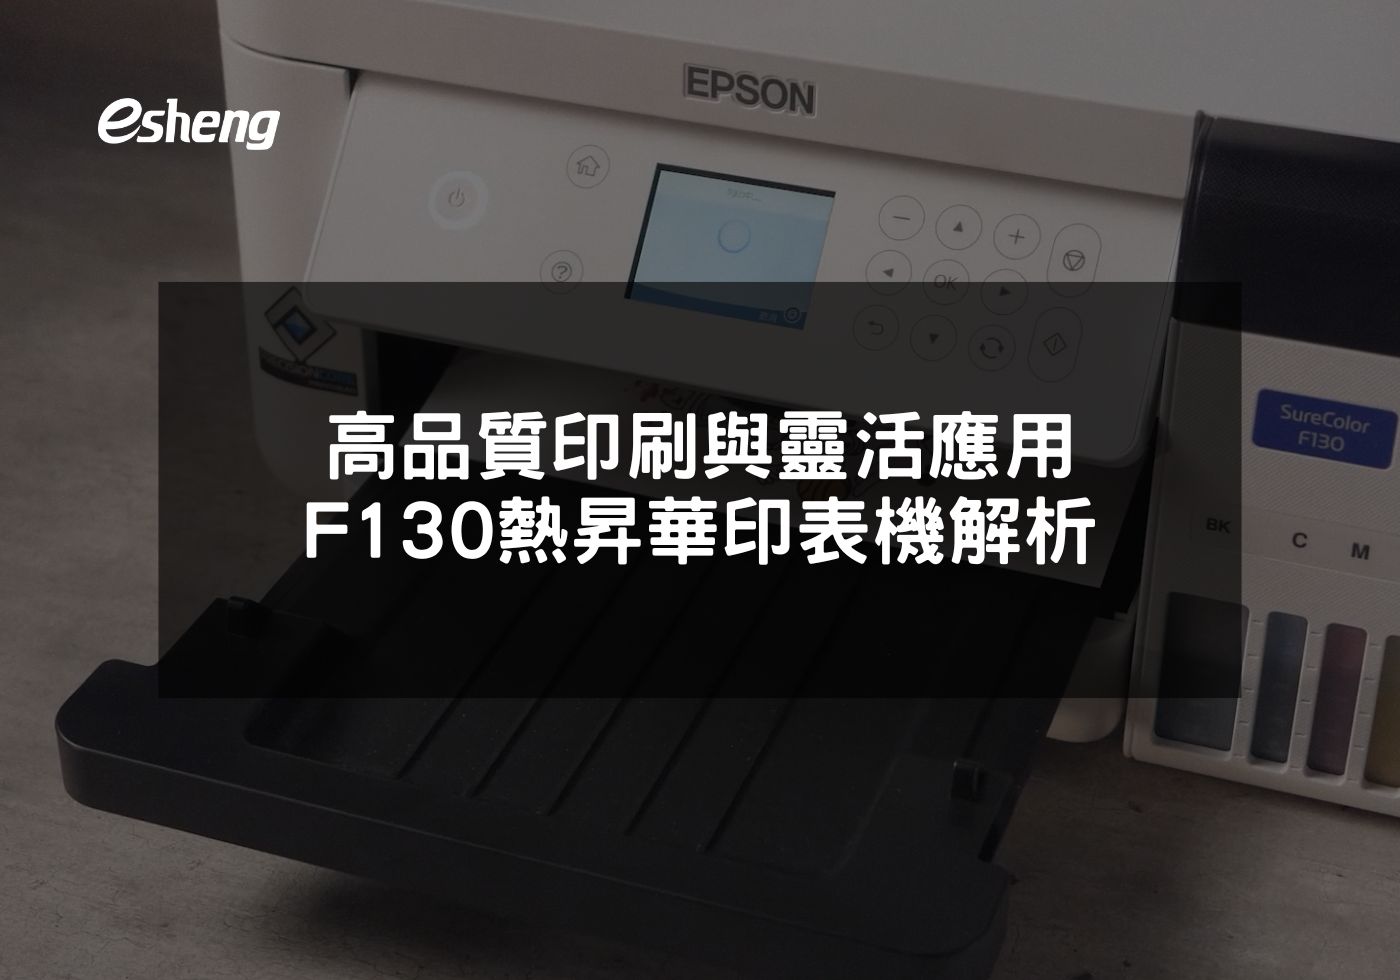 EPSON F130熱昇華印表機多功能高效打印解決方案